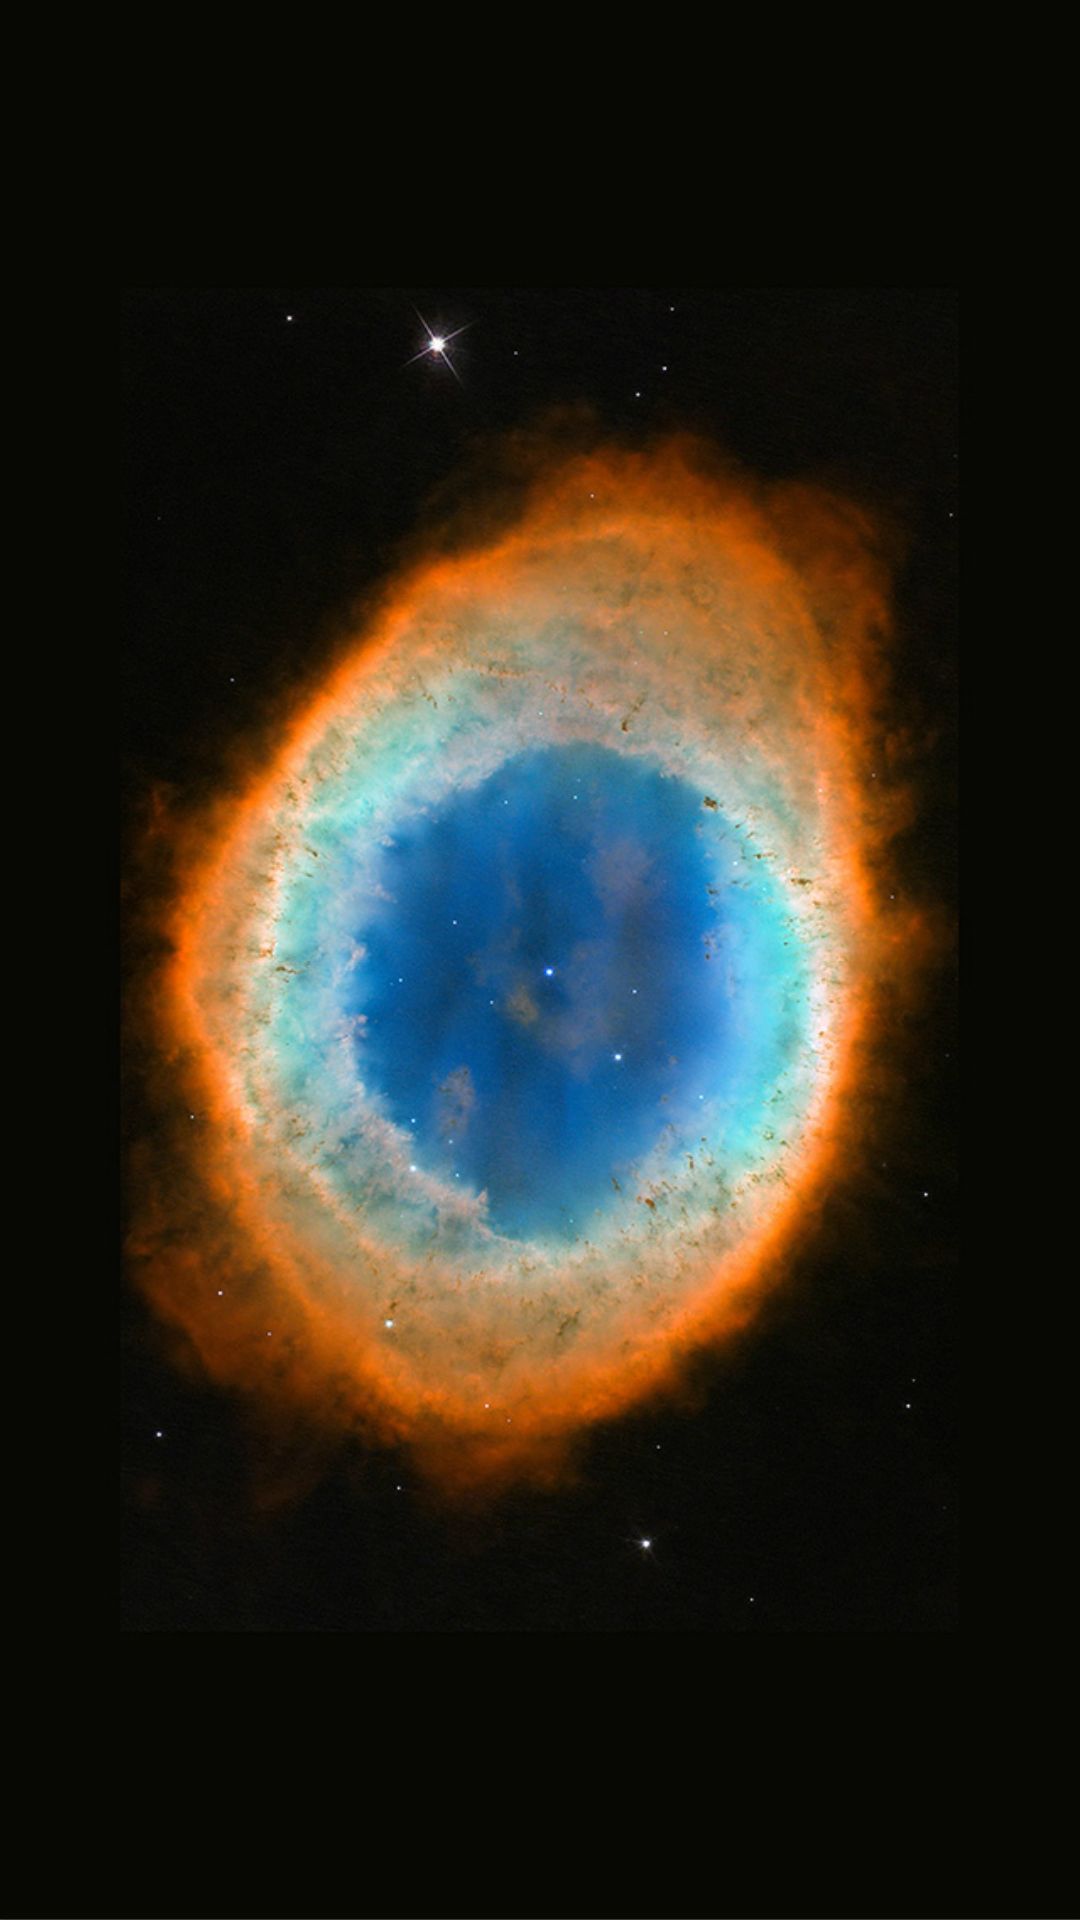 Gods Eye Nebula Messier IPhone 6 Wallpaper Download. IPhone Wallpaper, IPad Wallpaper One Stop Download. Nebula Wallpaper, Nebula, Astronomy